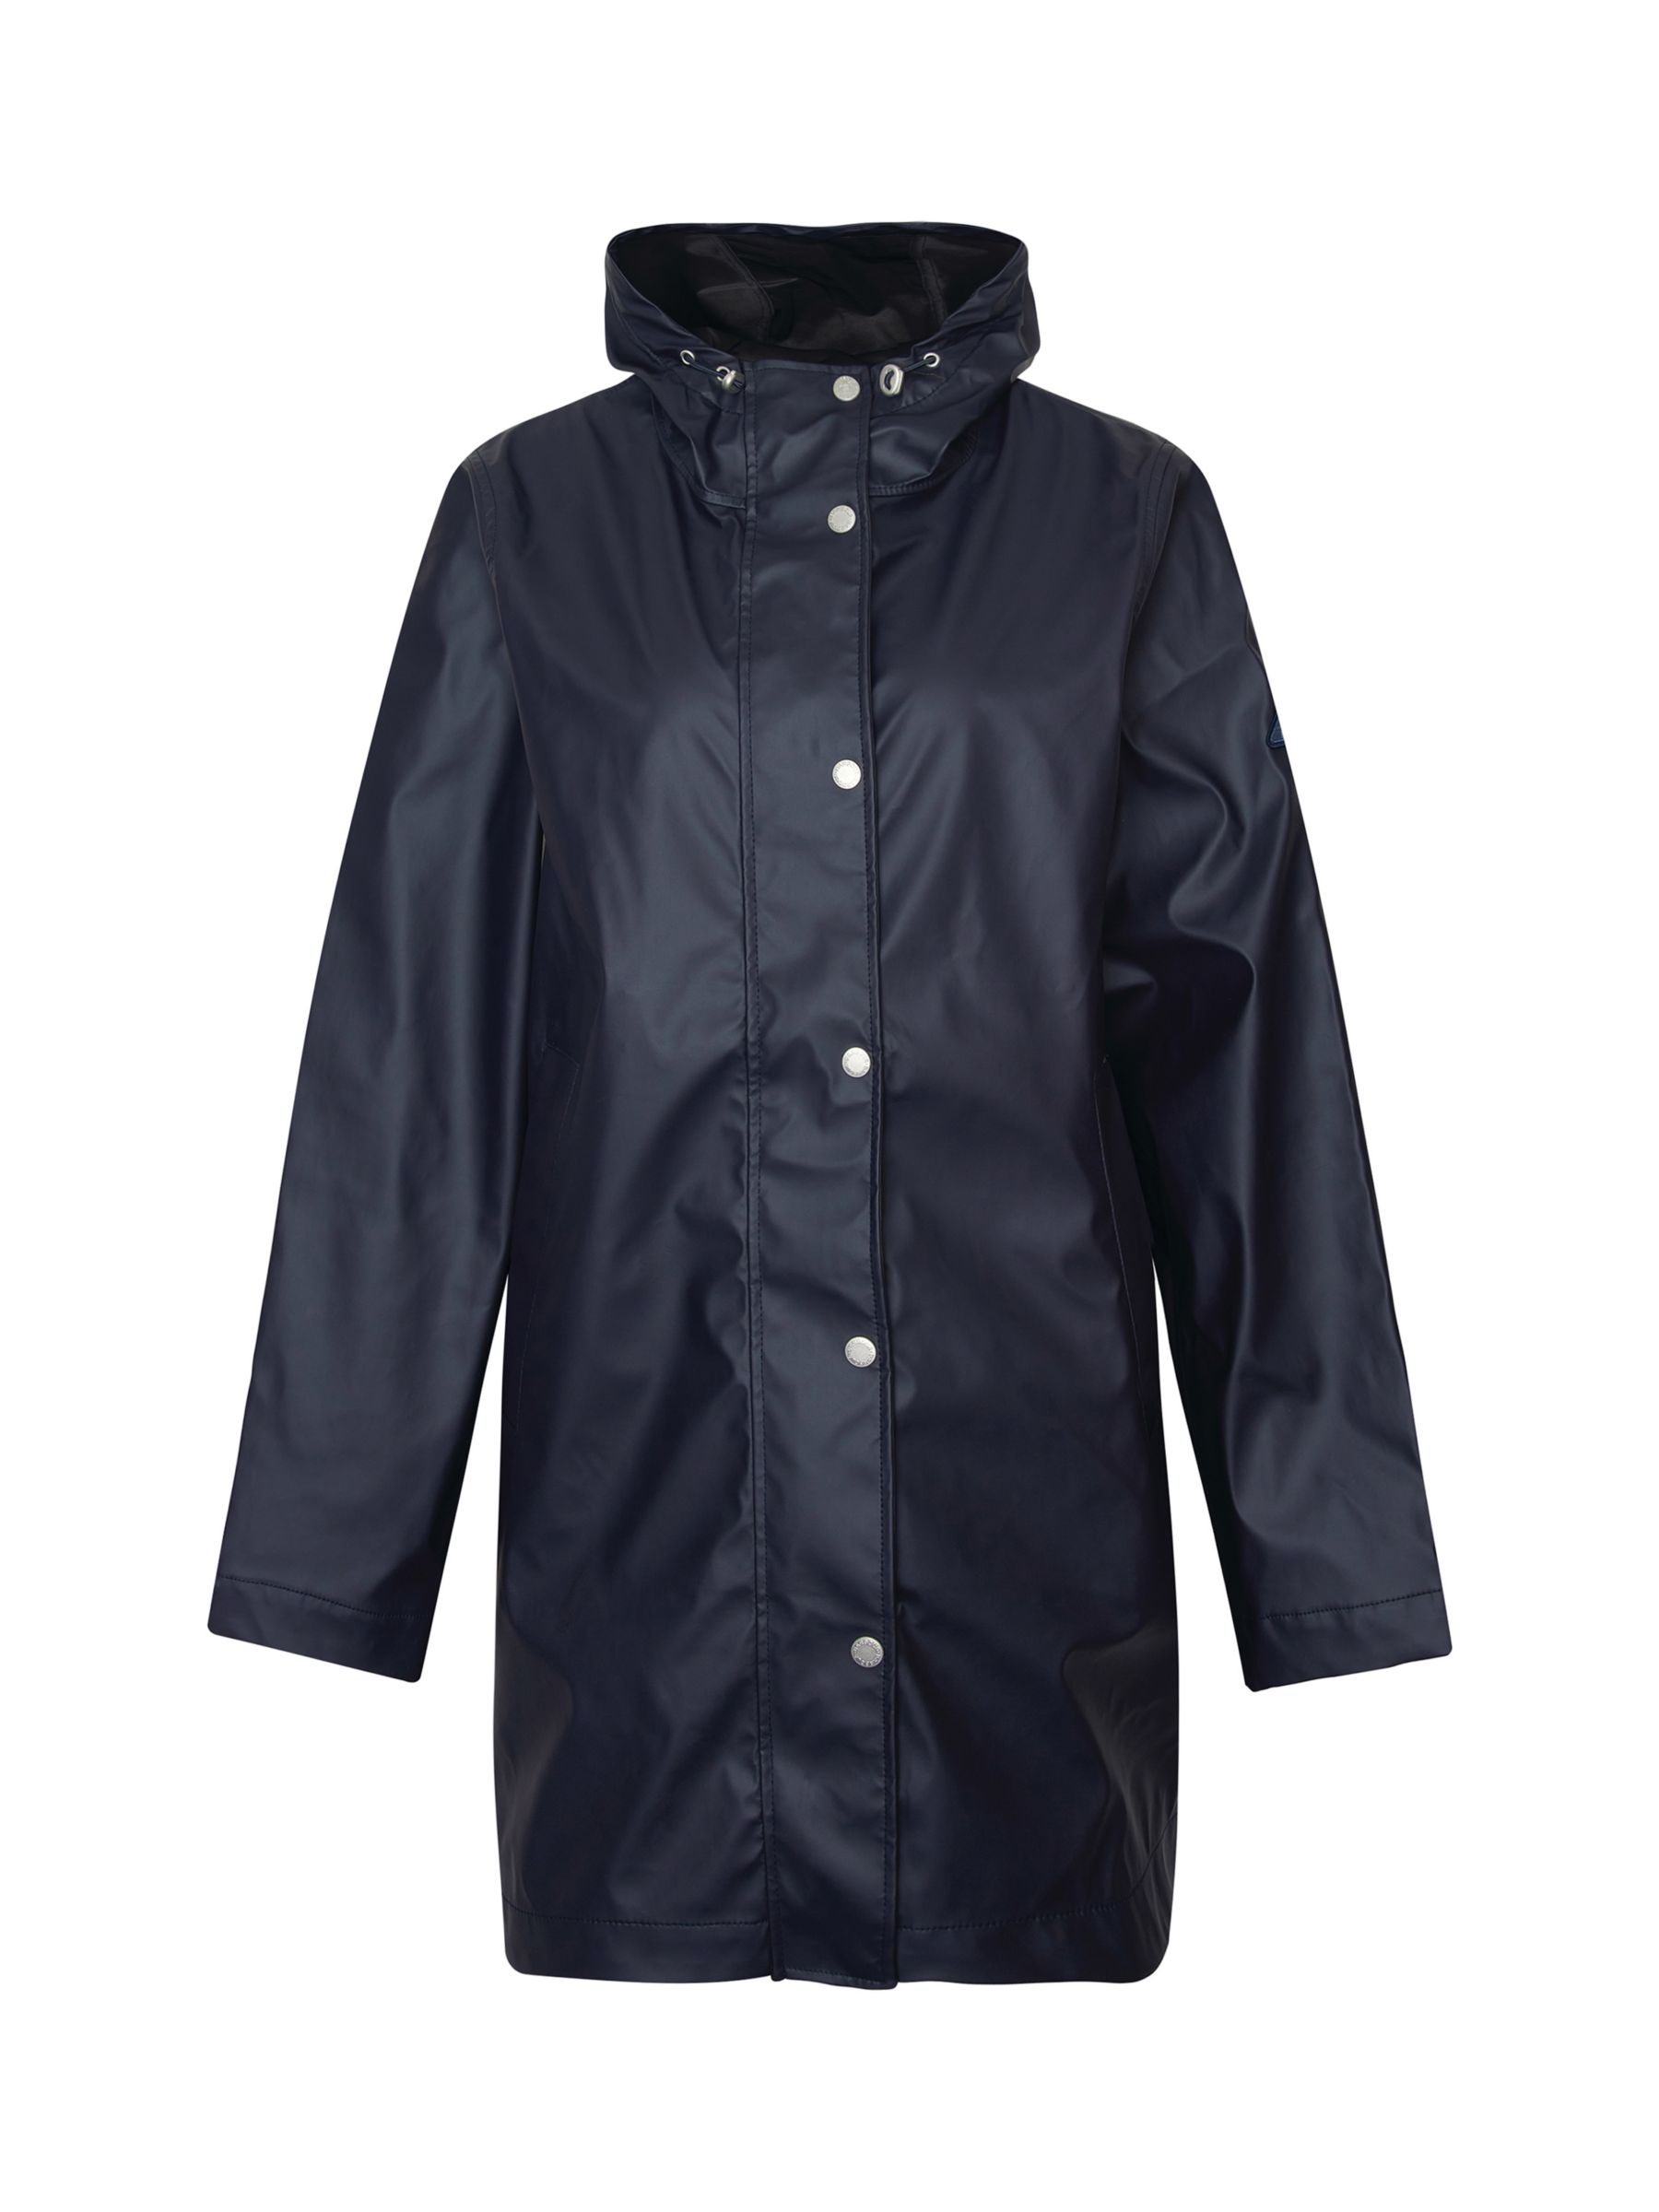 Barbour Woodland Showerproof Jacket, Dark Navy at John Lewis & Partners